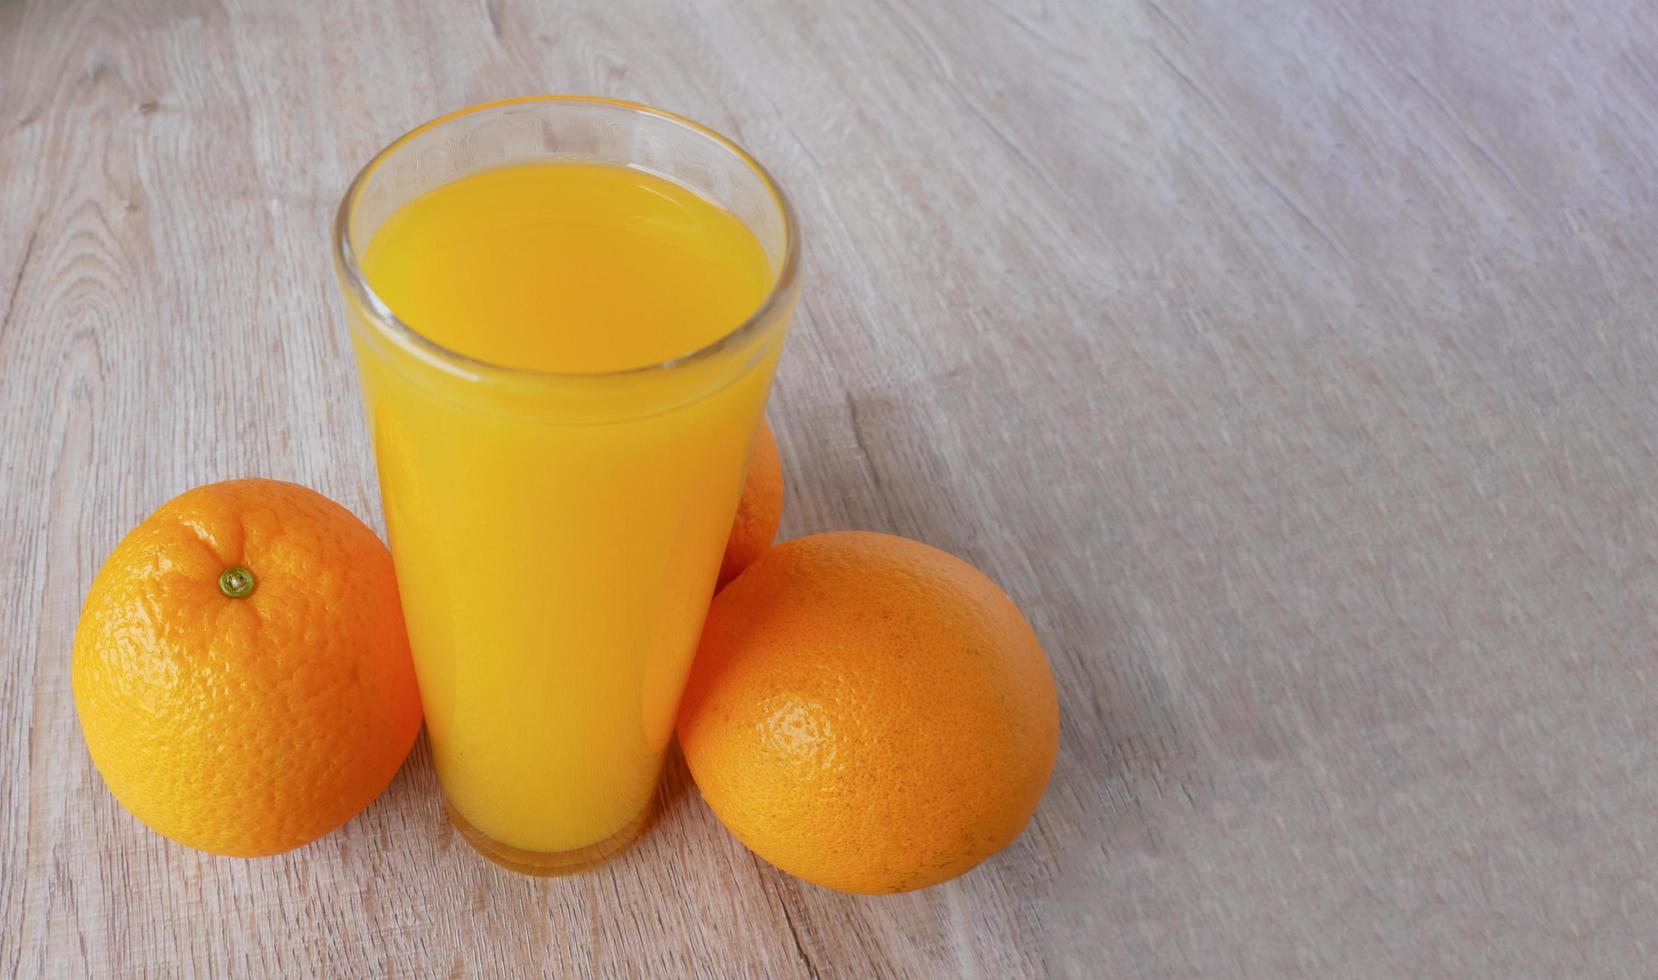 Glass of orange juice and oranges on wooden floor photo